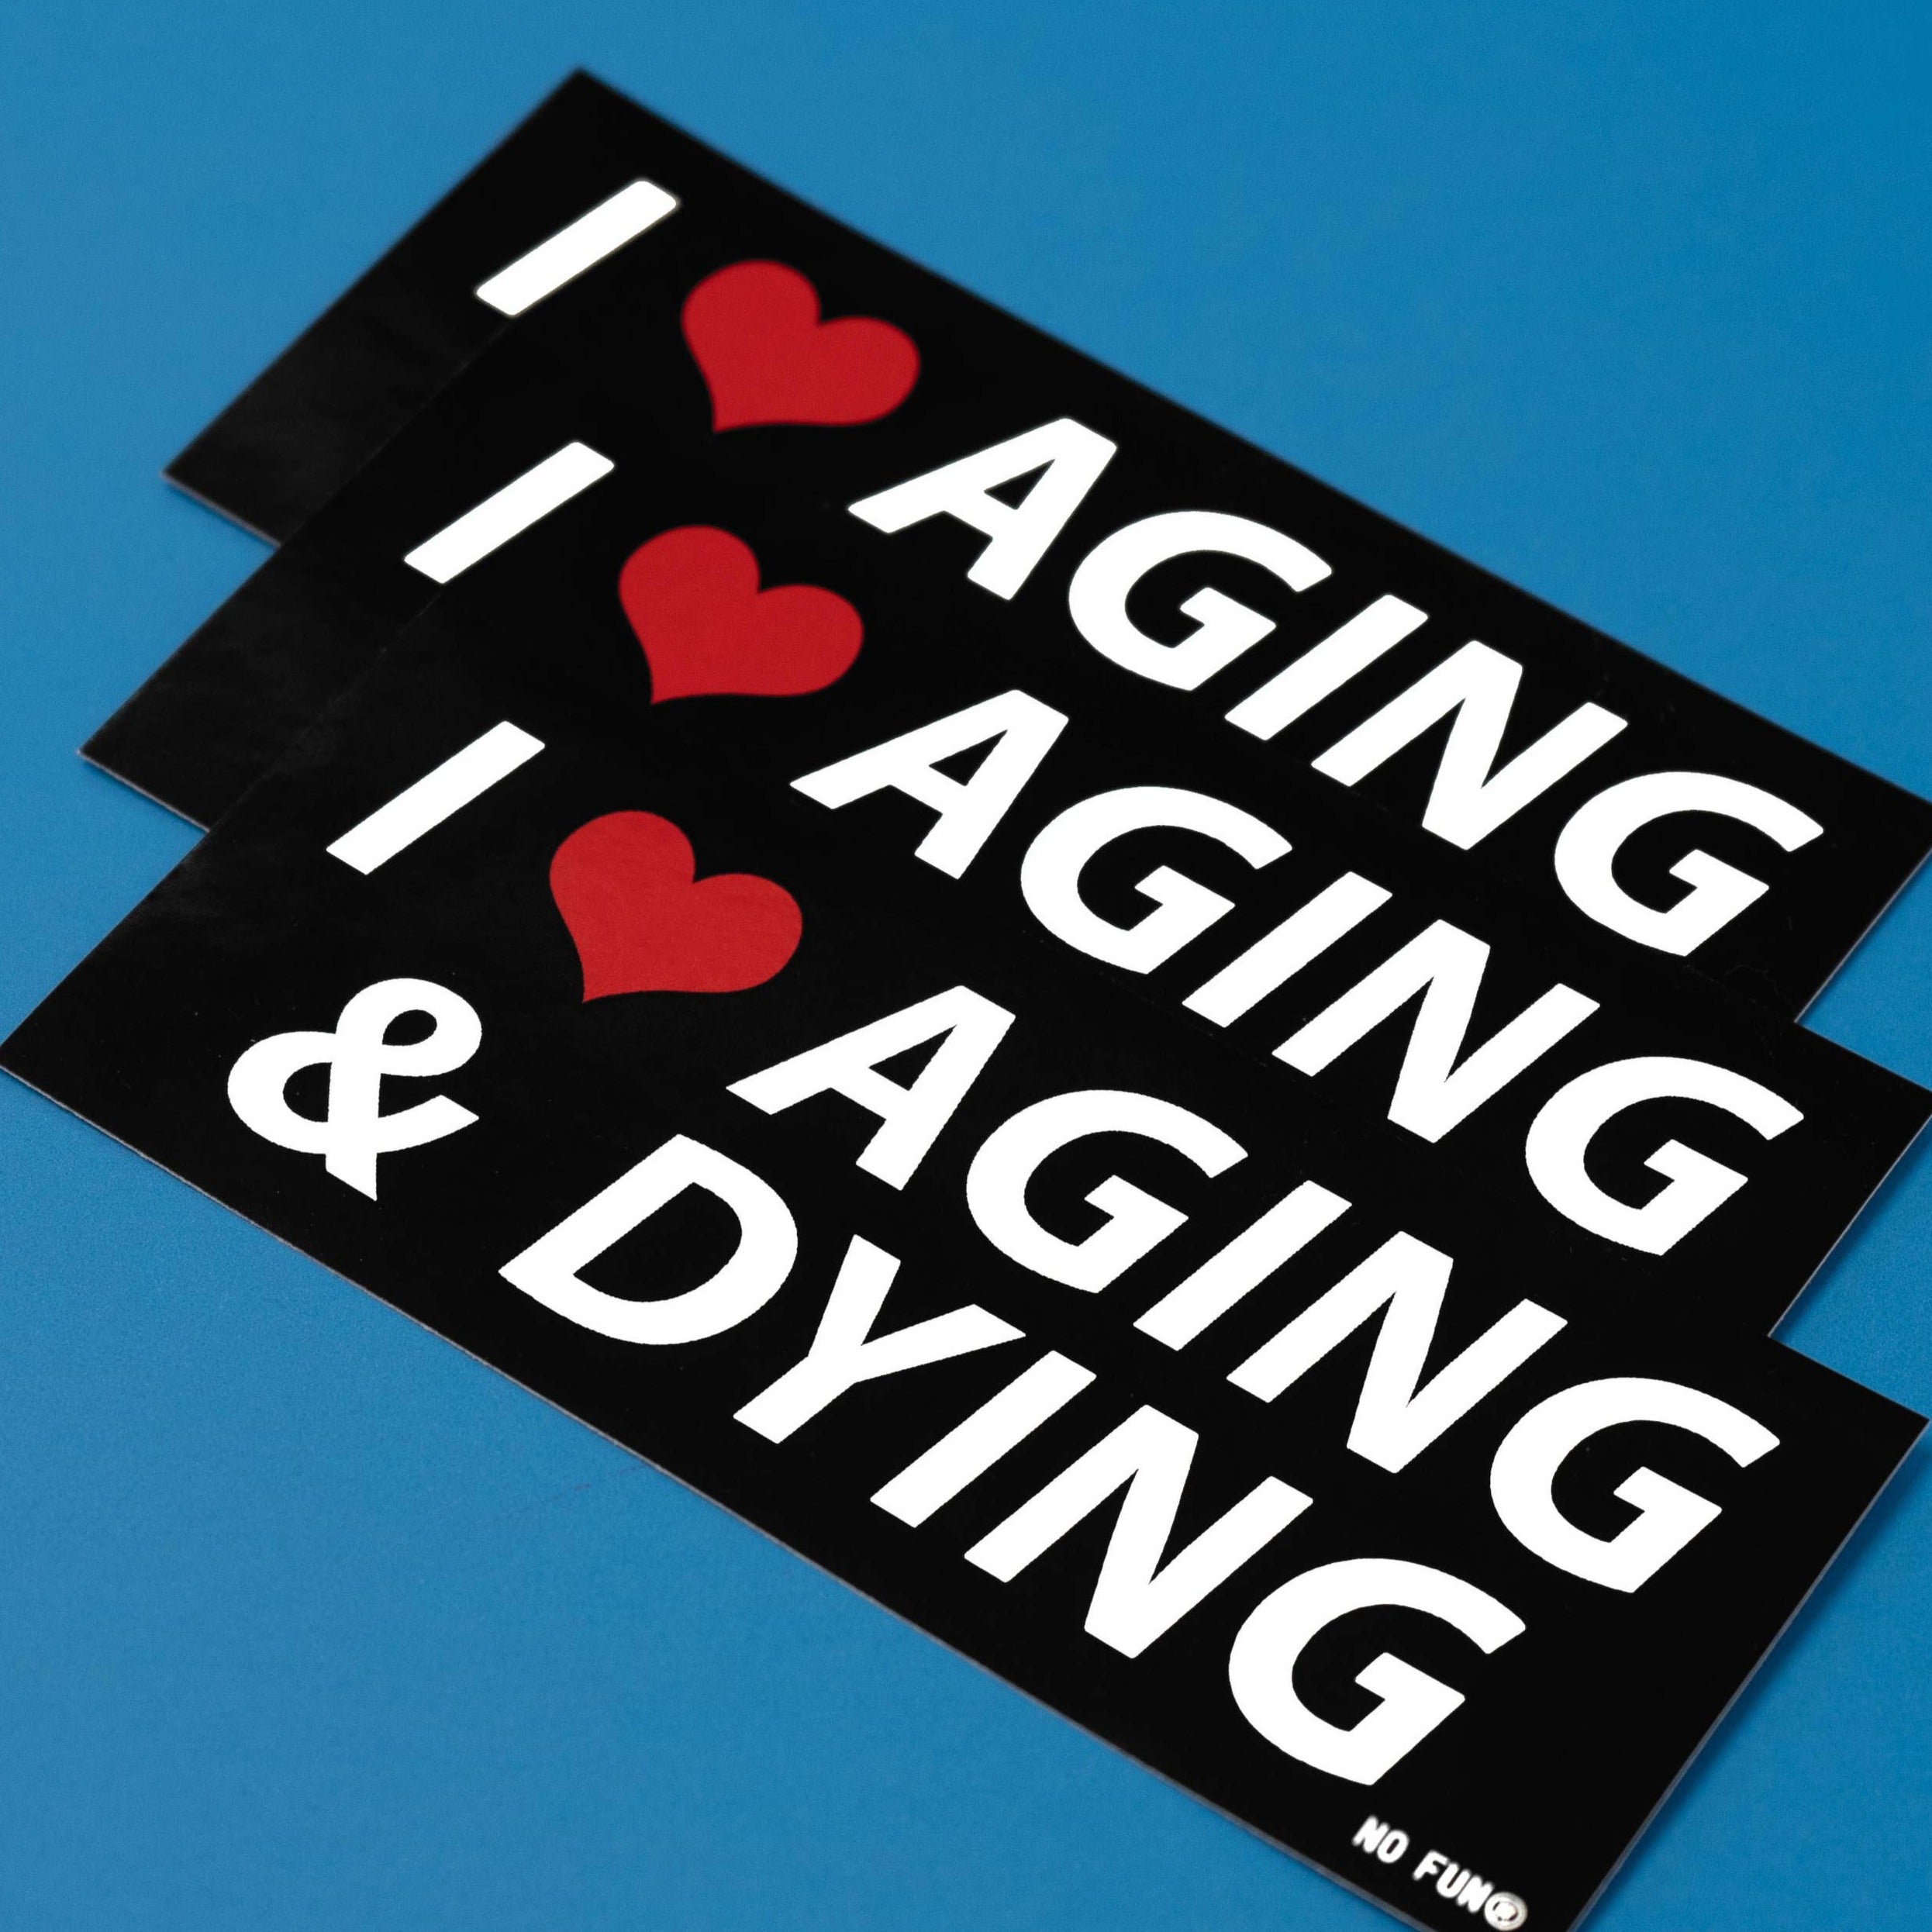 Aging & Dying Bumper Sticker: Black